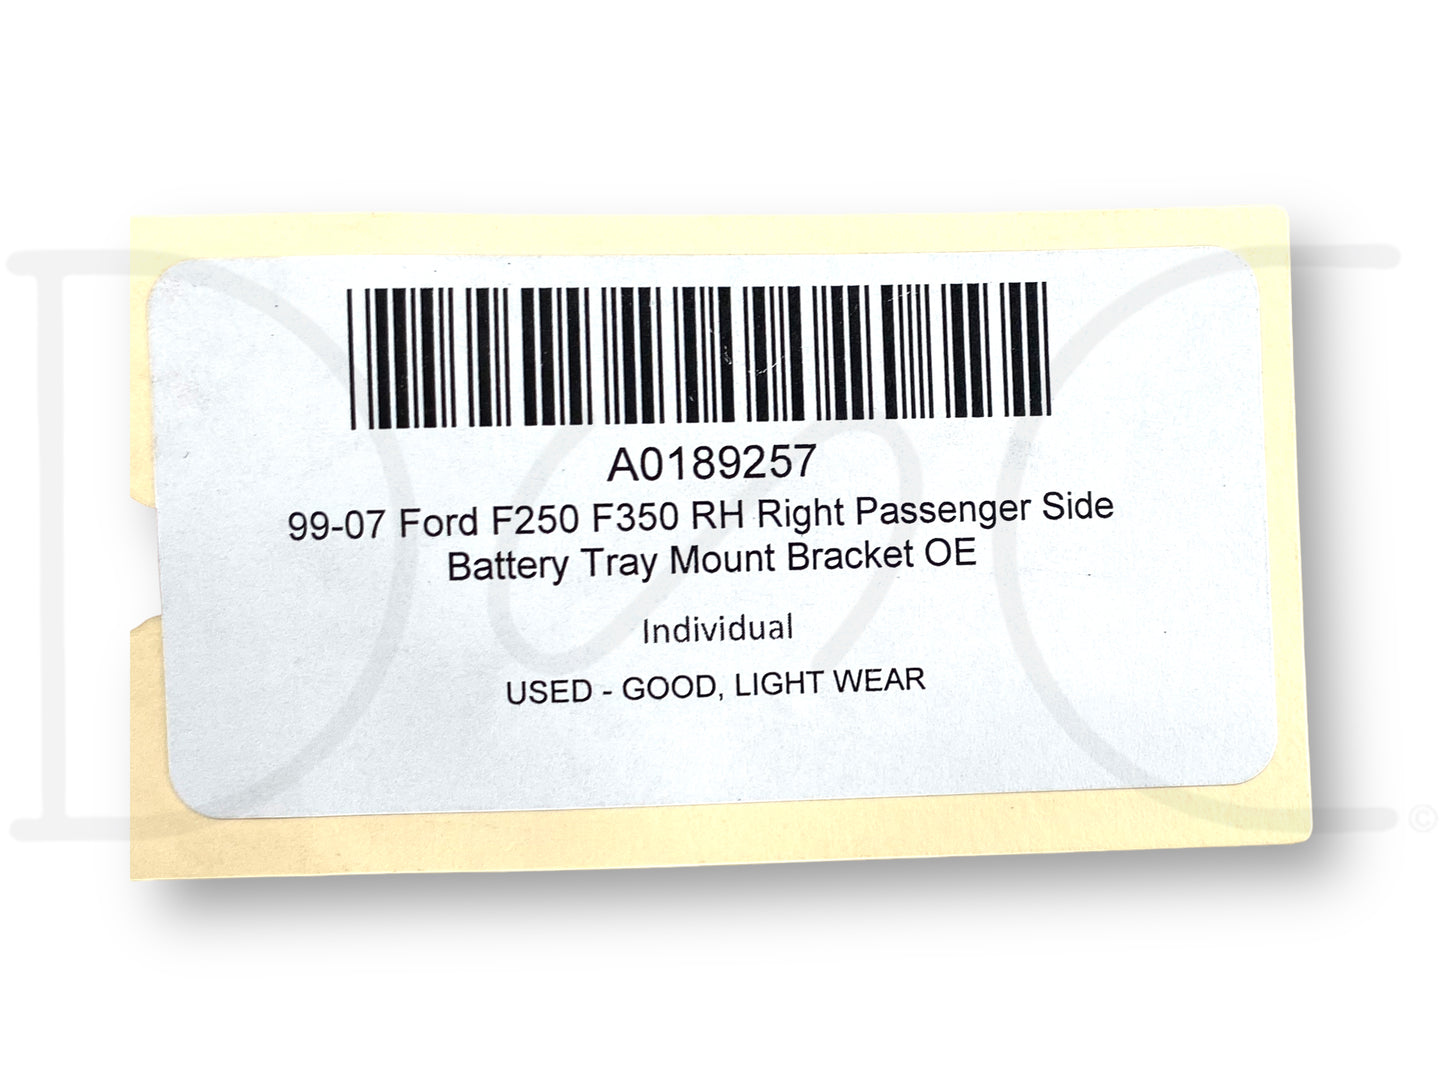 99-07 Ford F250 F350 RH Right Passenger Side Battery Tray Mount Bracket OE